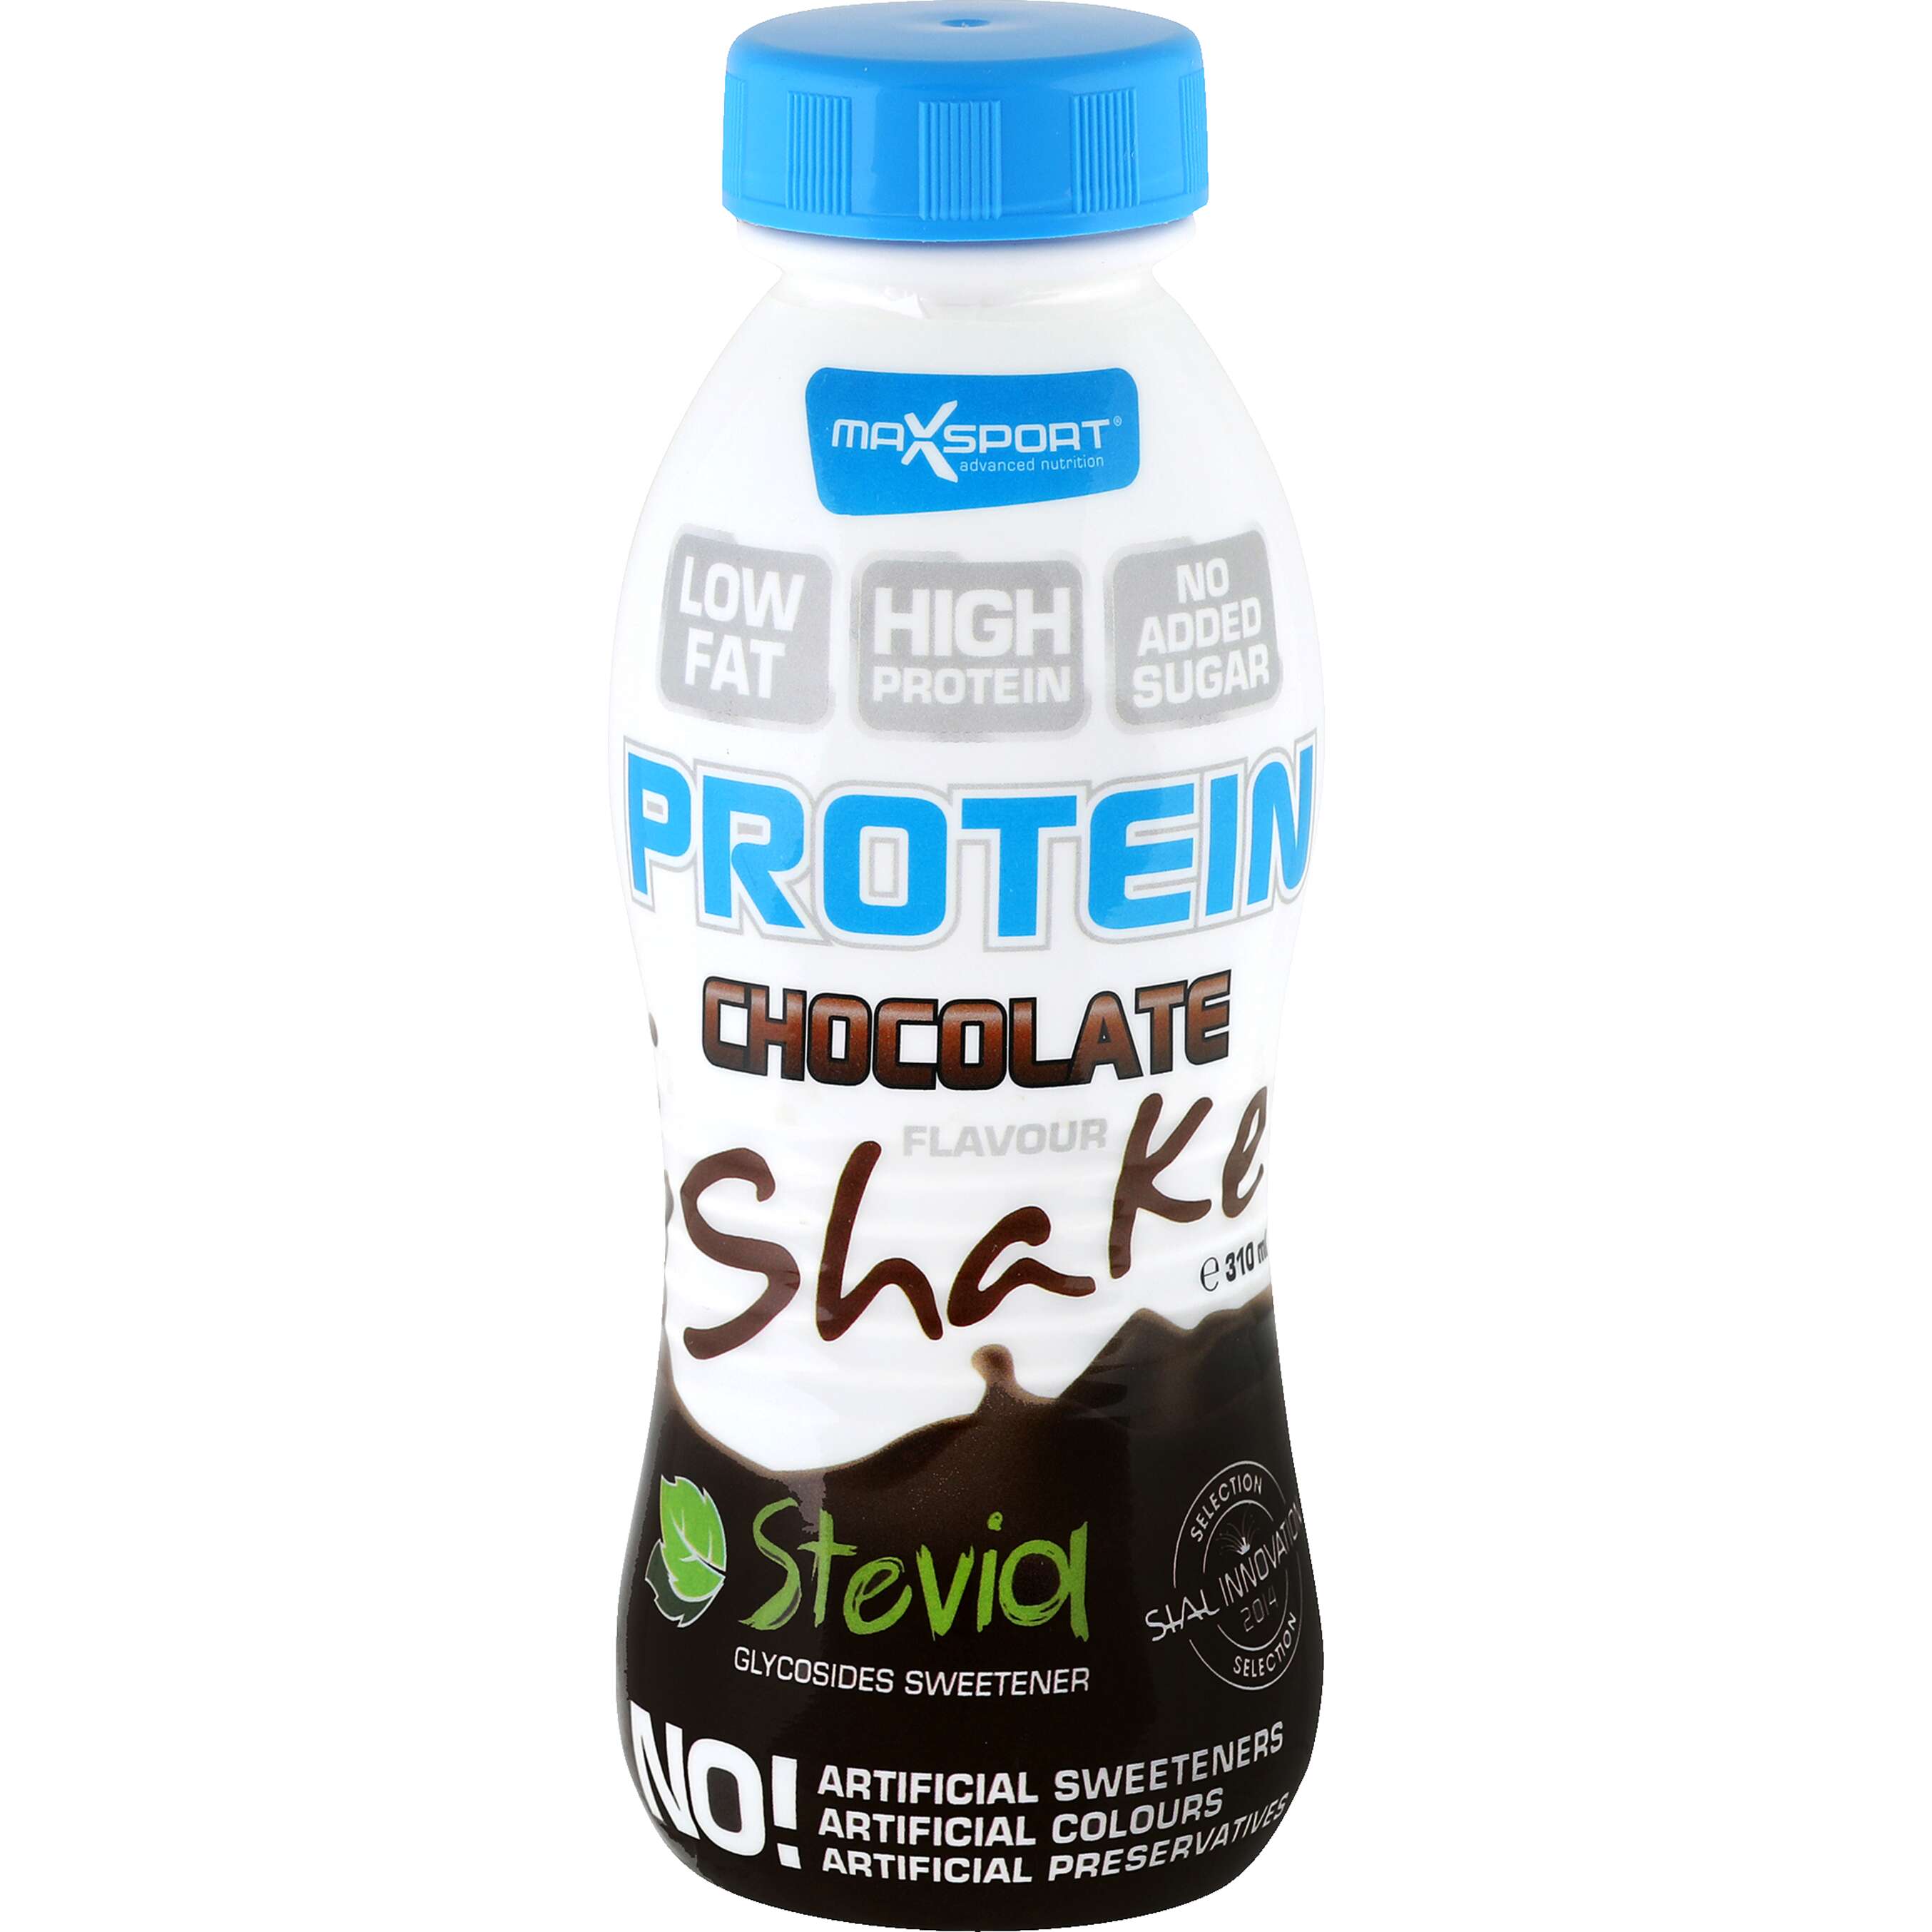 Zobrazit nabídku Max Sport Protein shake